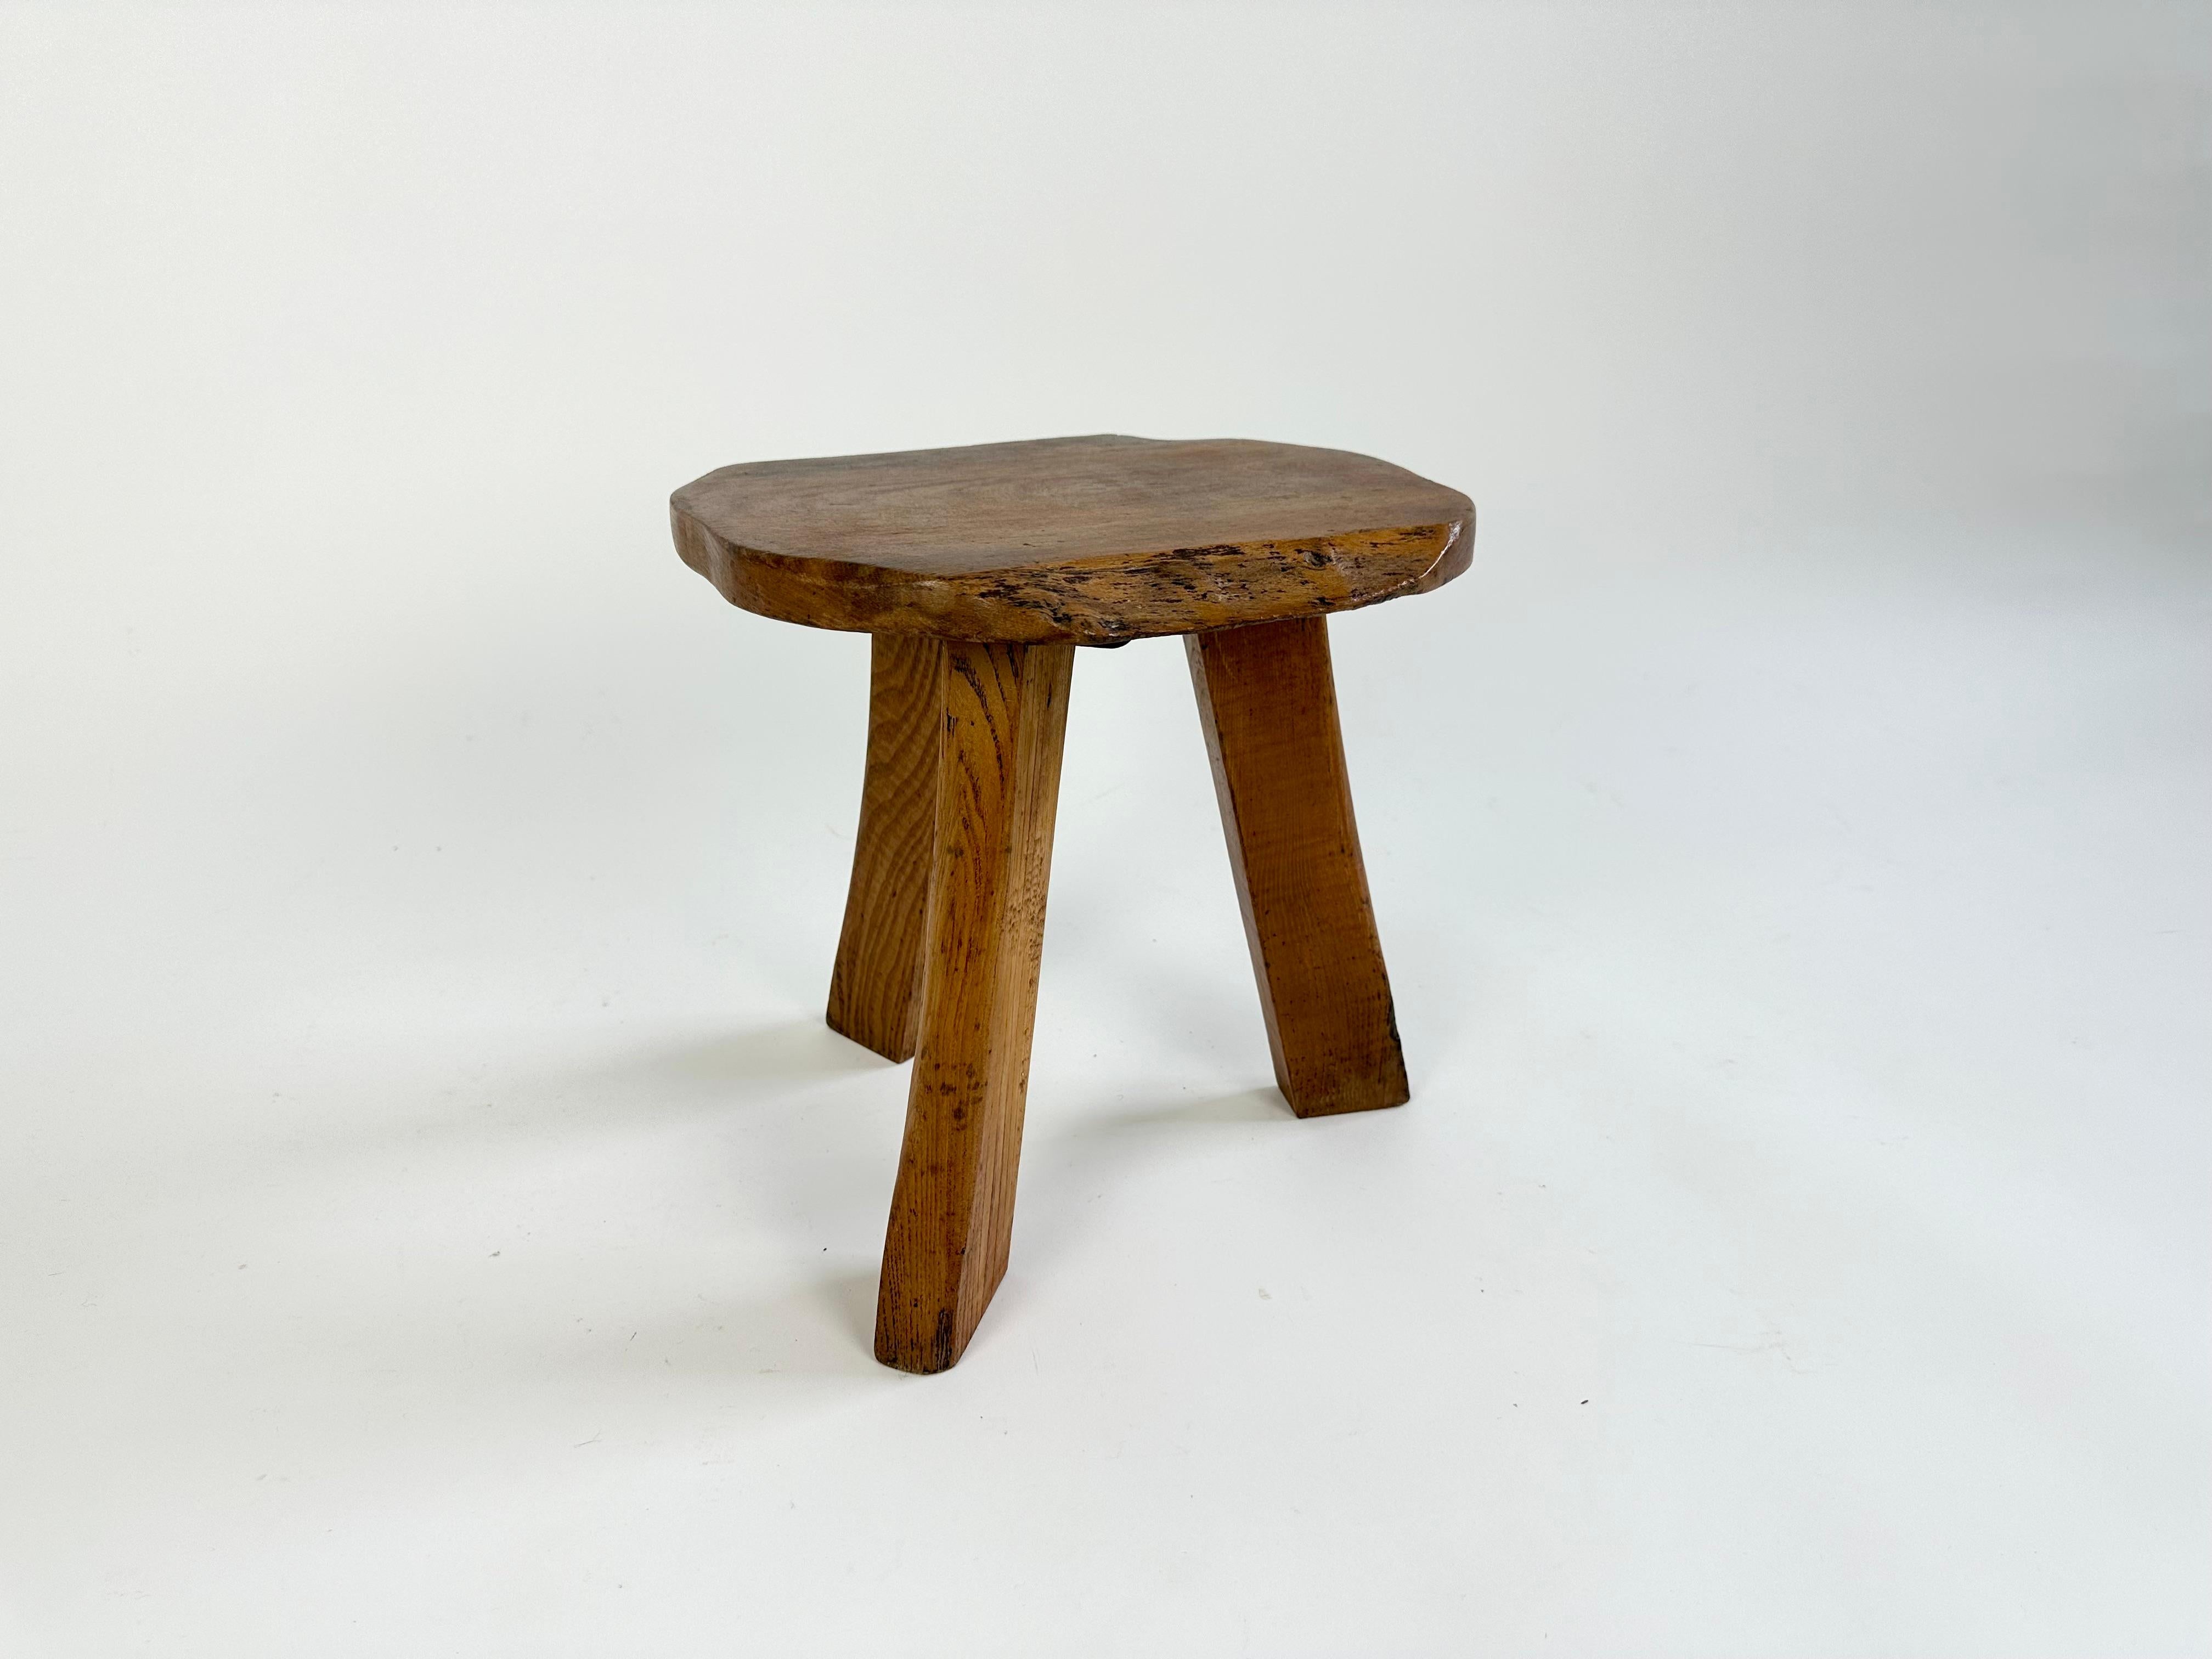 British Vintage rustic stool by Wanderwood, England c.1950-60 For Sale